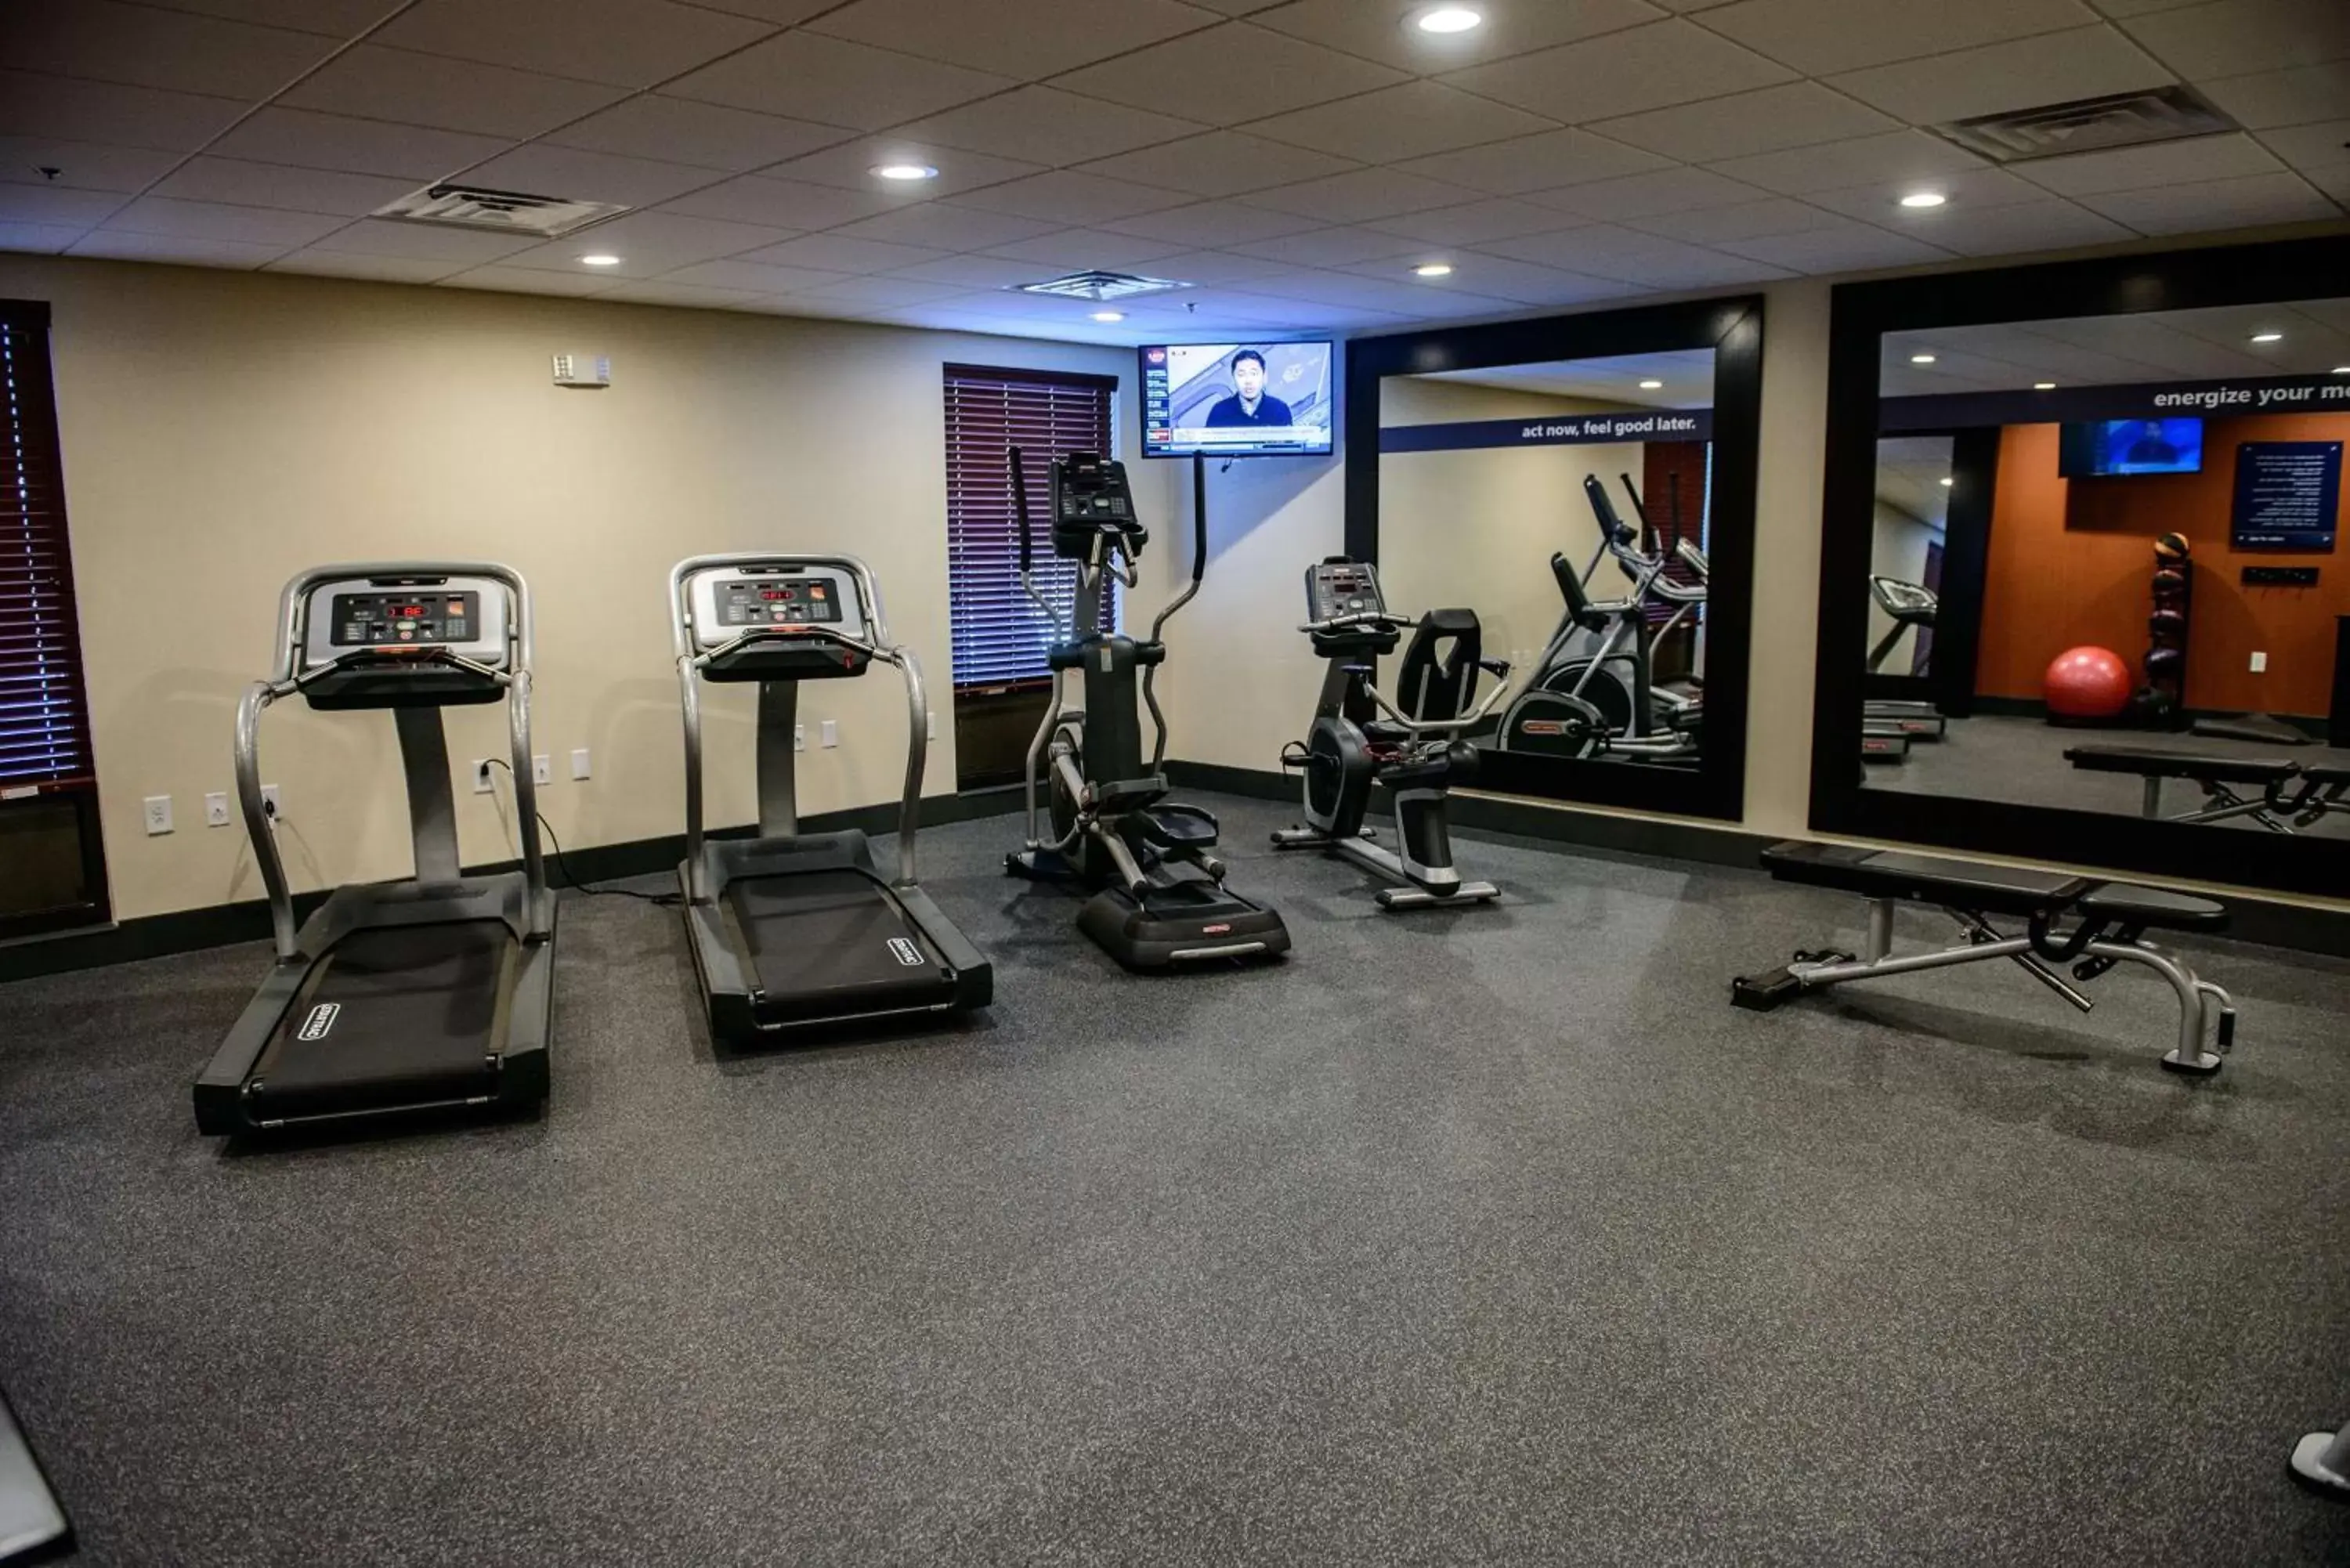 Fitness centre/facilities, Fitness Center/Facilities in Hampton Inn Bainbridge, GA